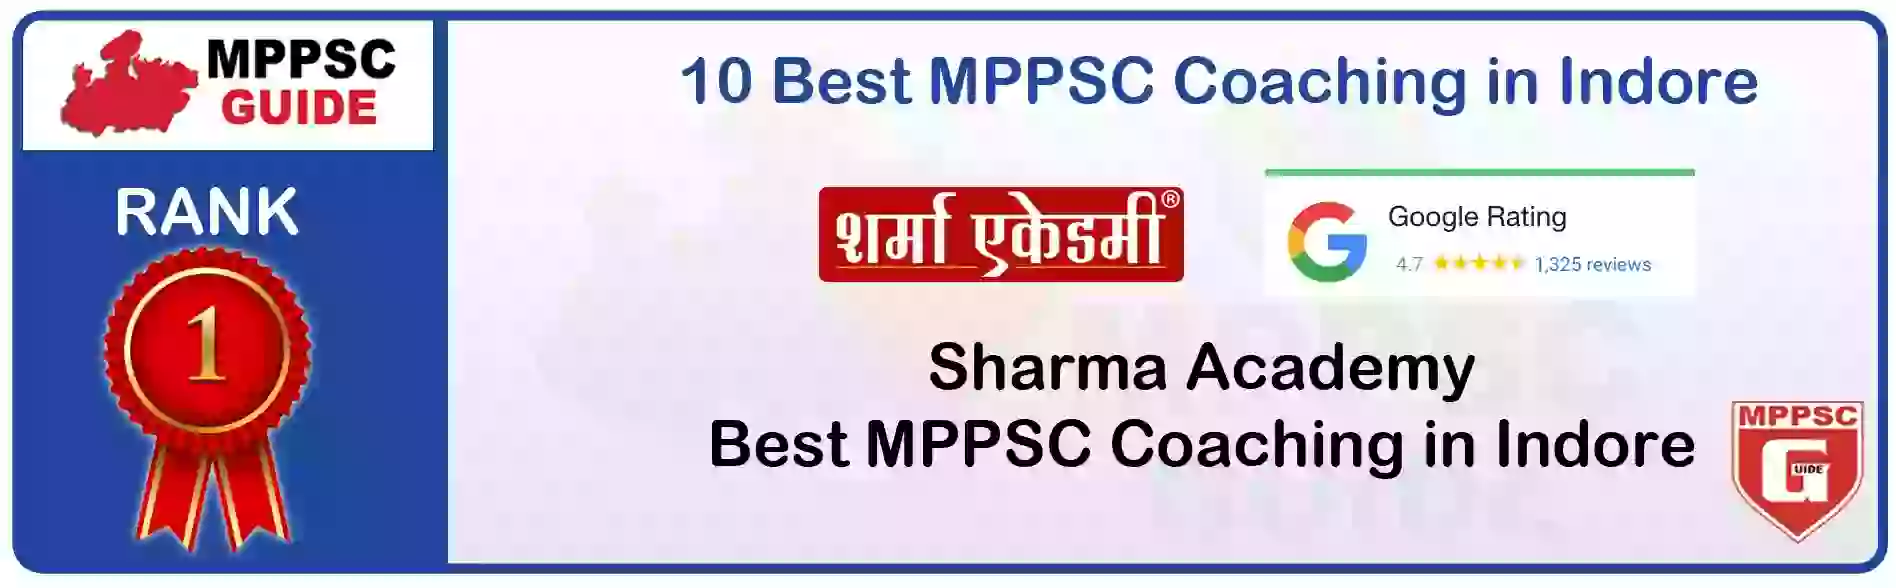 MPPSC Coaching in Khandwa, MPPSC Coaching Institute In Khandwa, Best MPPSC Coaching in Khandwa, Top 10 MPPSC Coaching In Khandwa, best mppsc coaching institute in khandwa, MPPSC Coaching Classes In Khandwa, MPPSC Online Coaching In Khandwa, mppsc coaching in Khandwa bhanwarkua